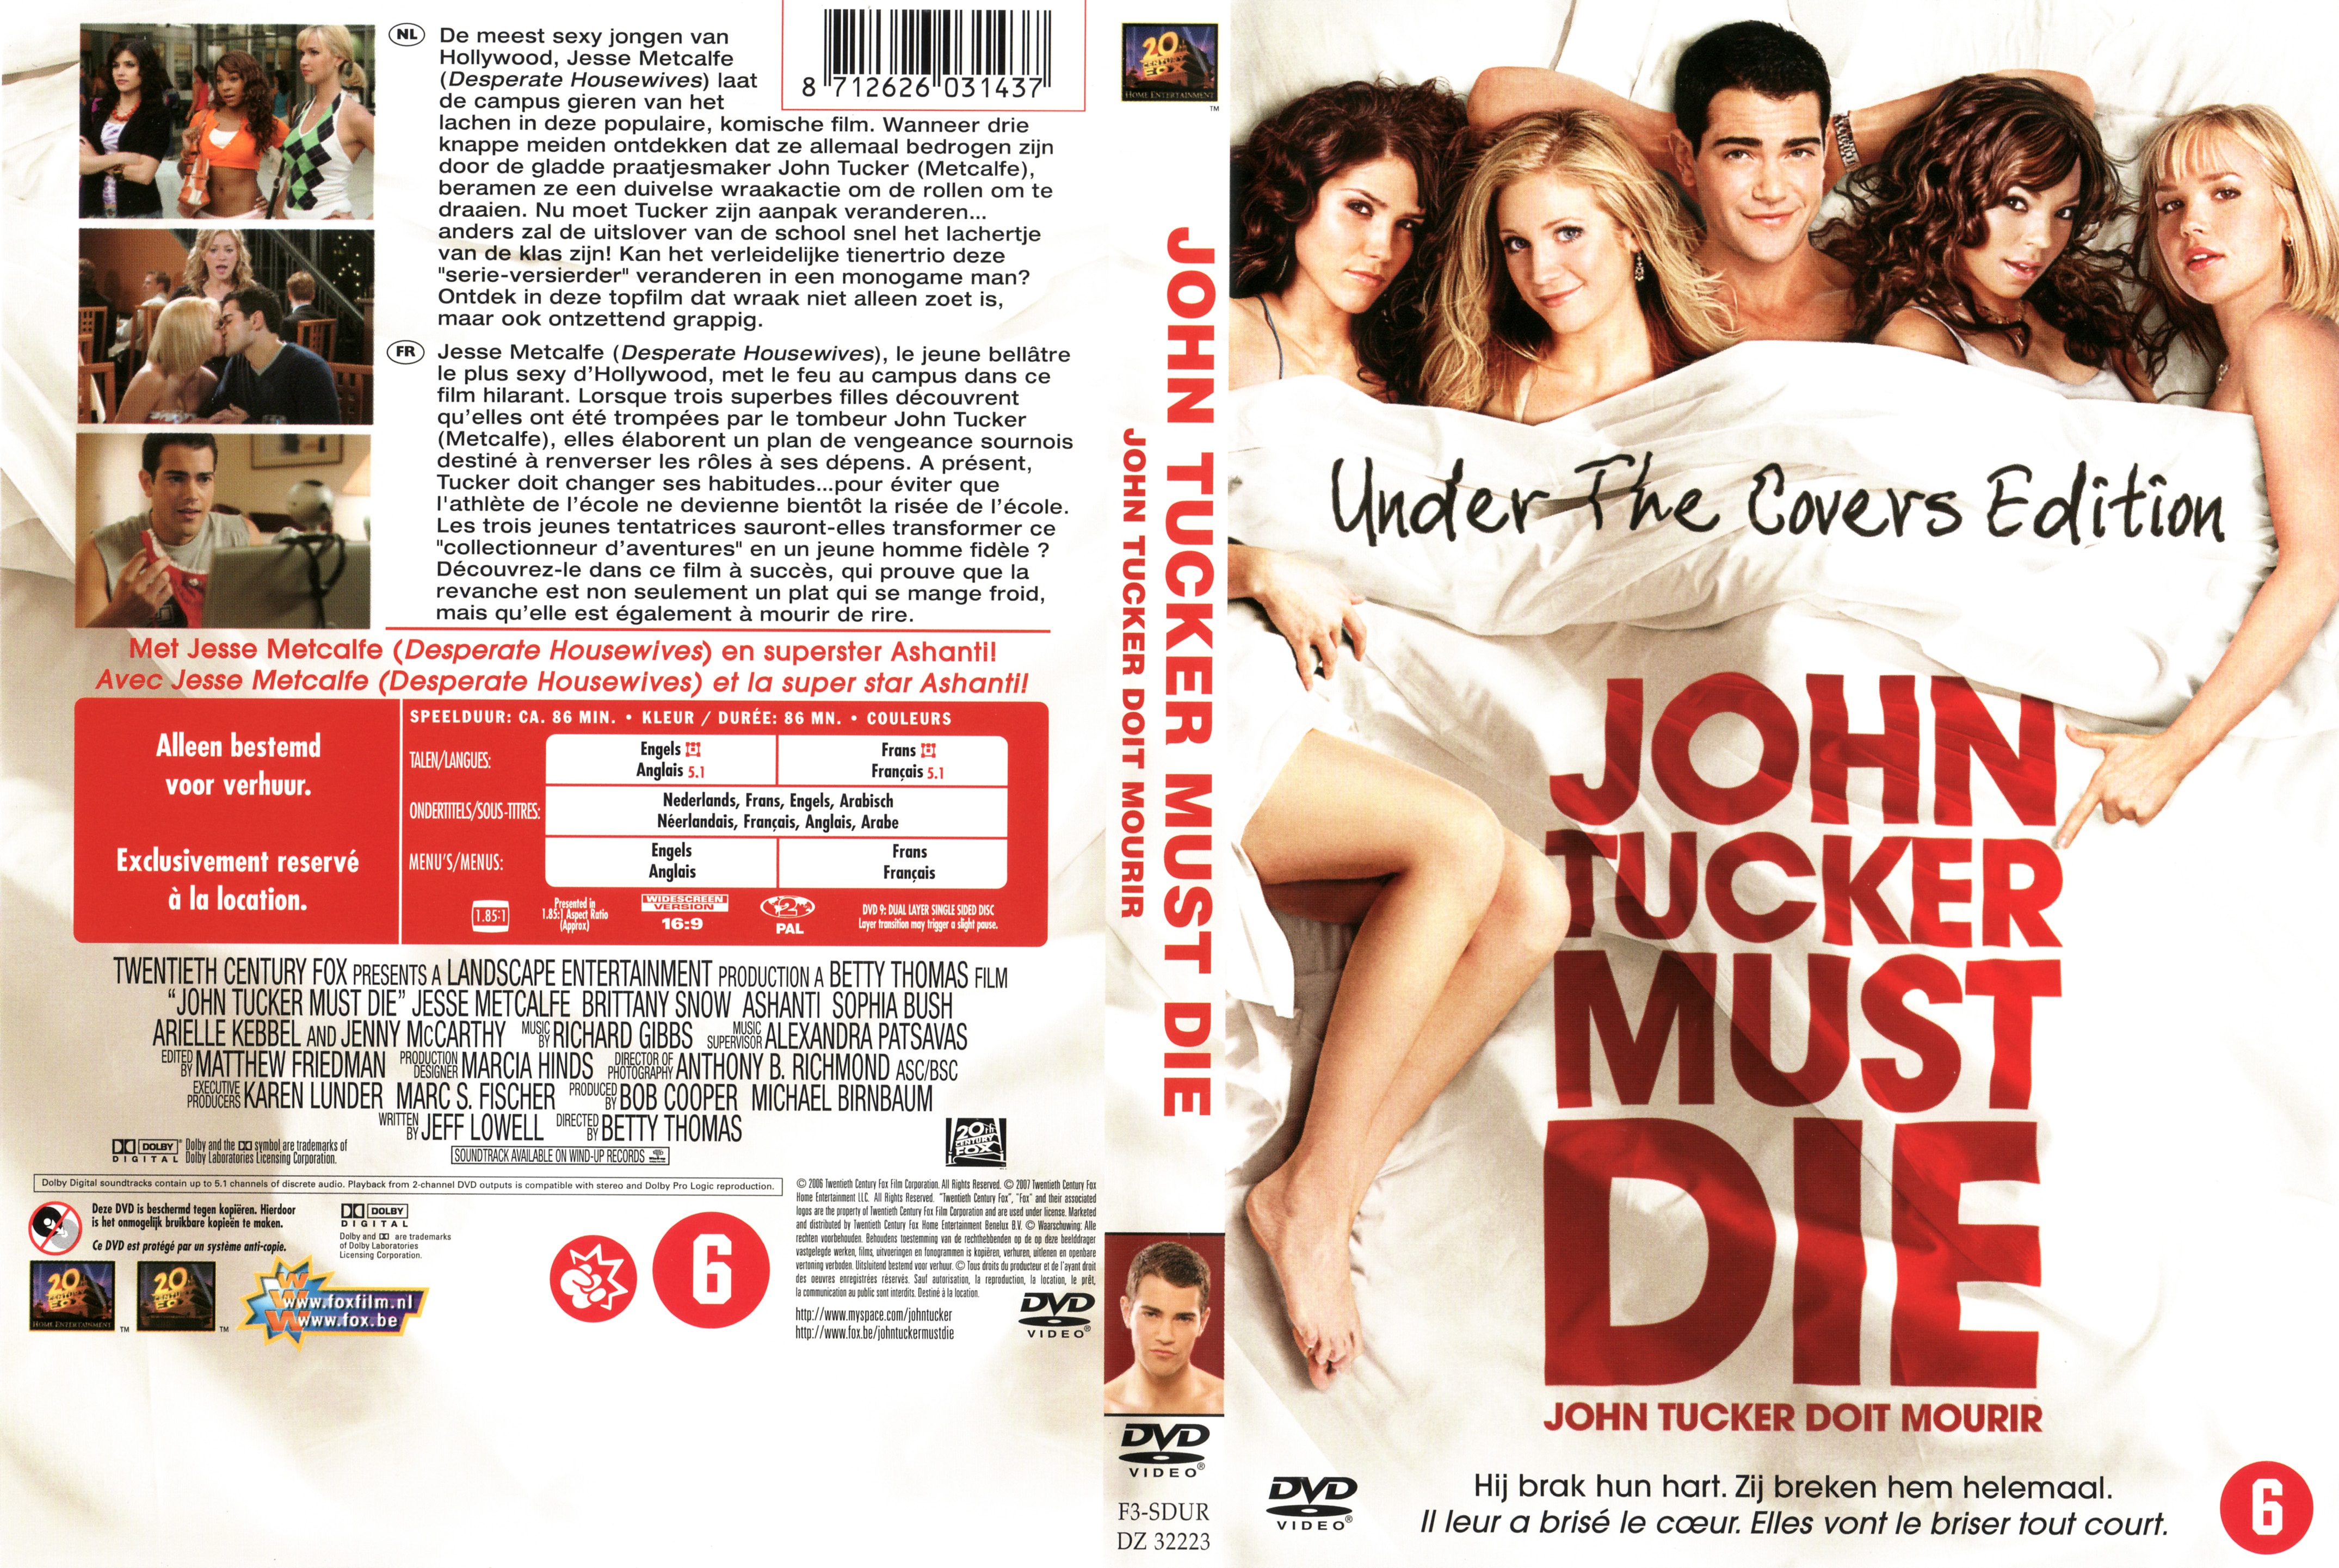 Jaquette DVD John Tucker doit mourir